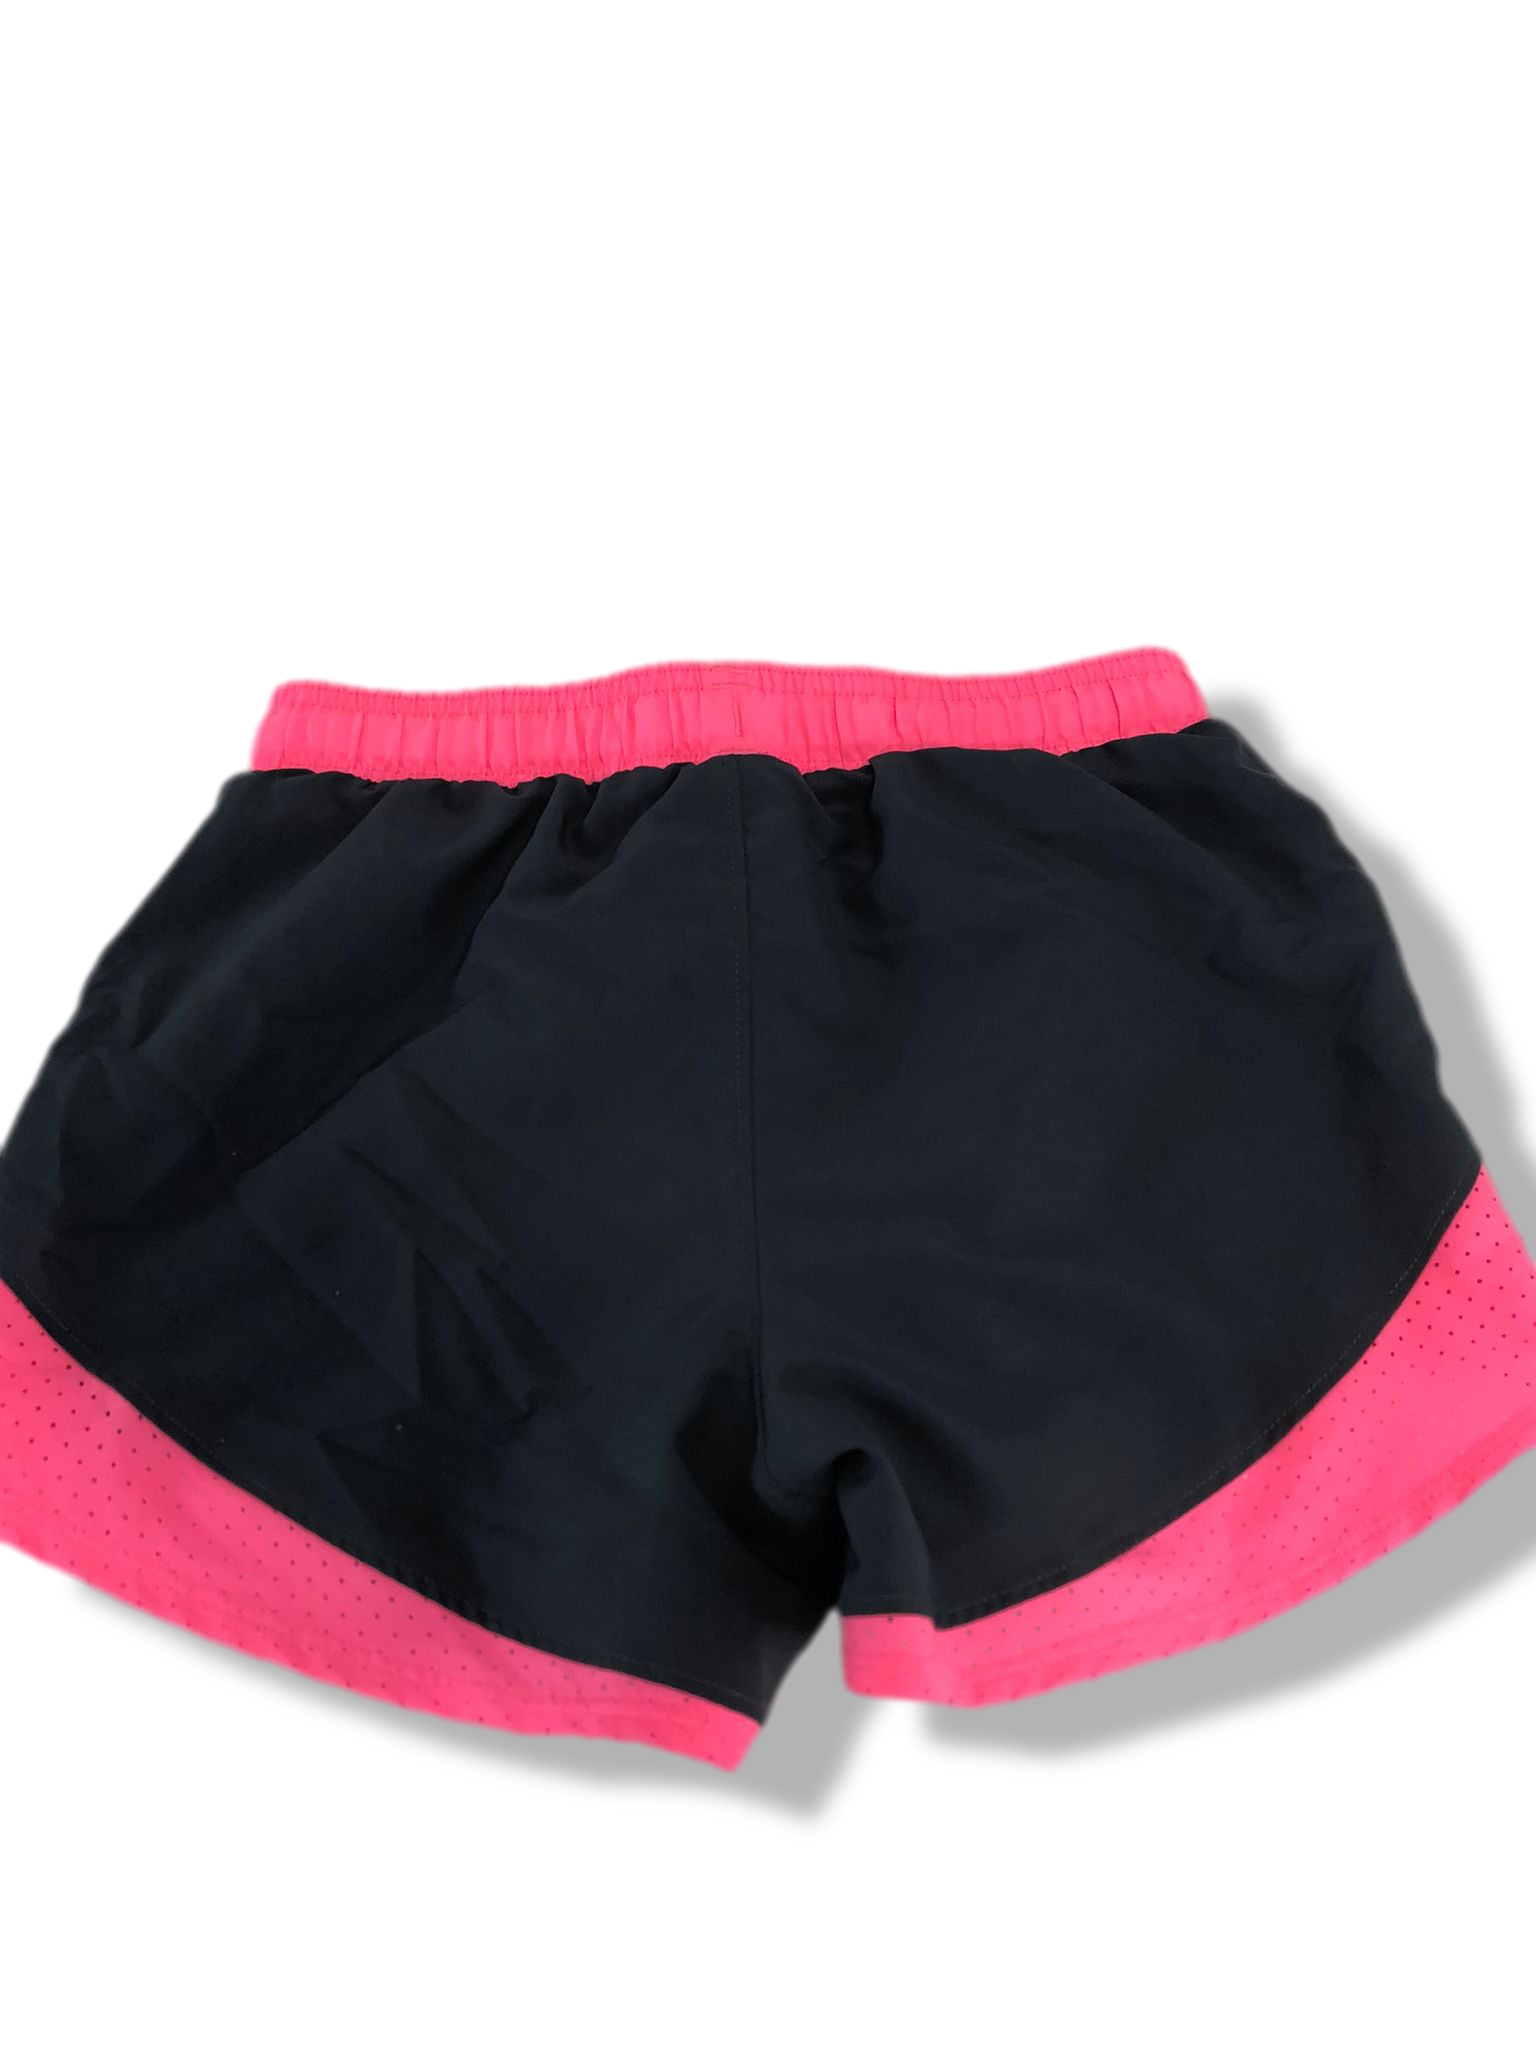 Under Armour Girls HeatGear Loose Running Shorts - Polyester - Leg Opening: 4"